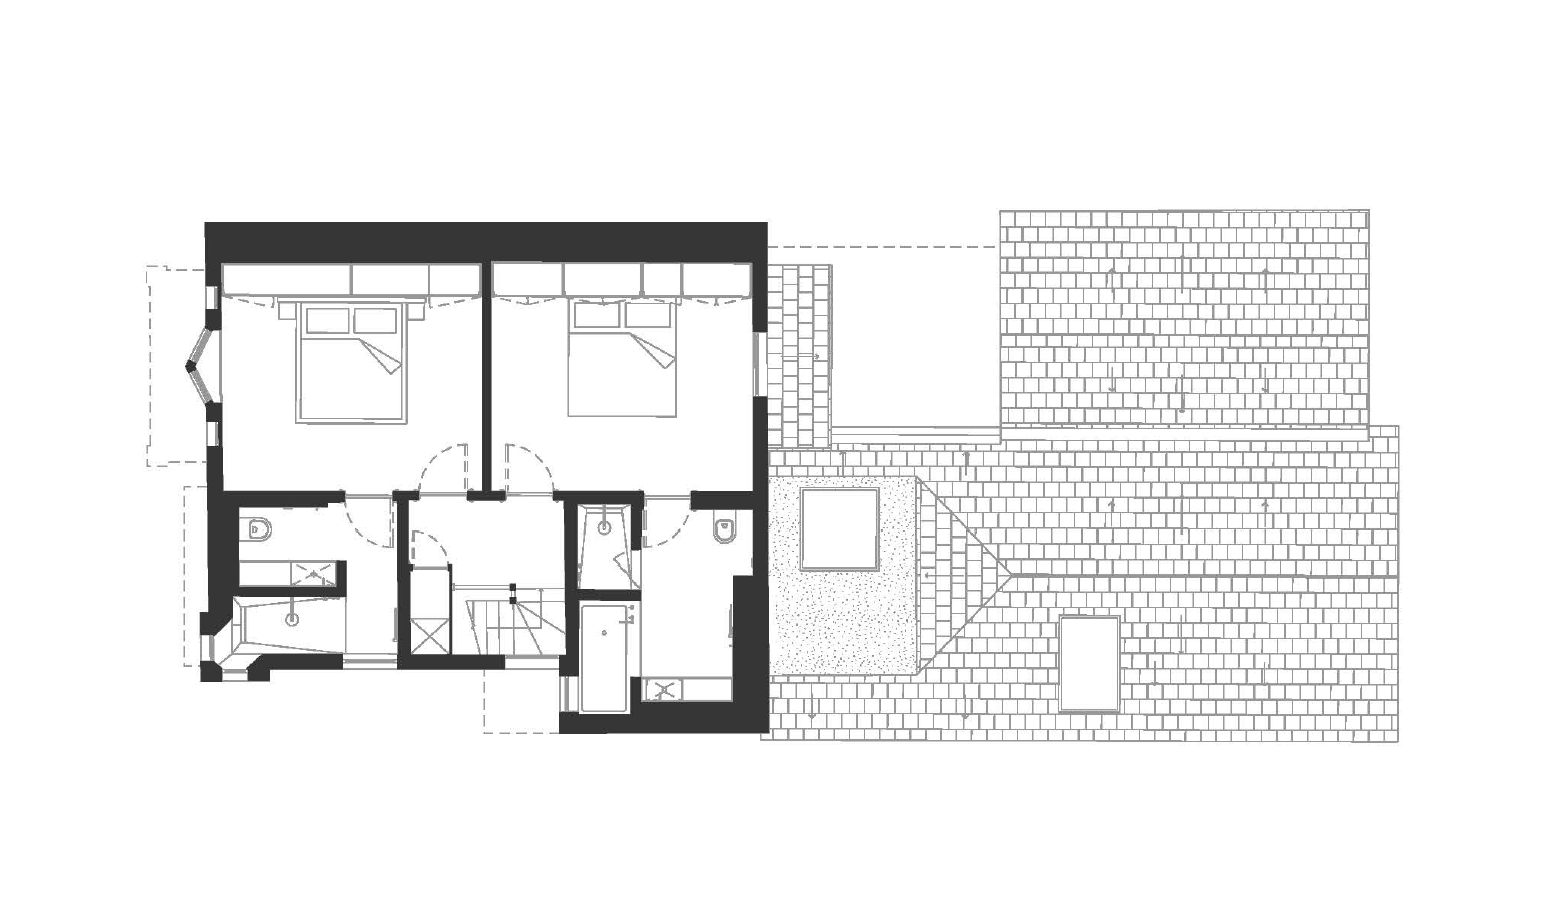 mclaren xl henley house floor plan second floor (our 3nd fl) 171